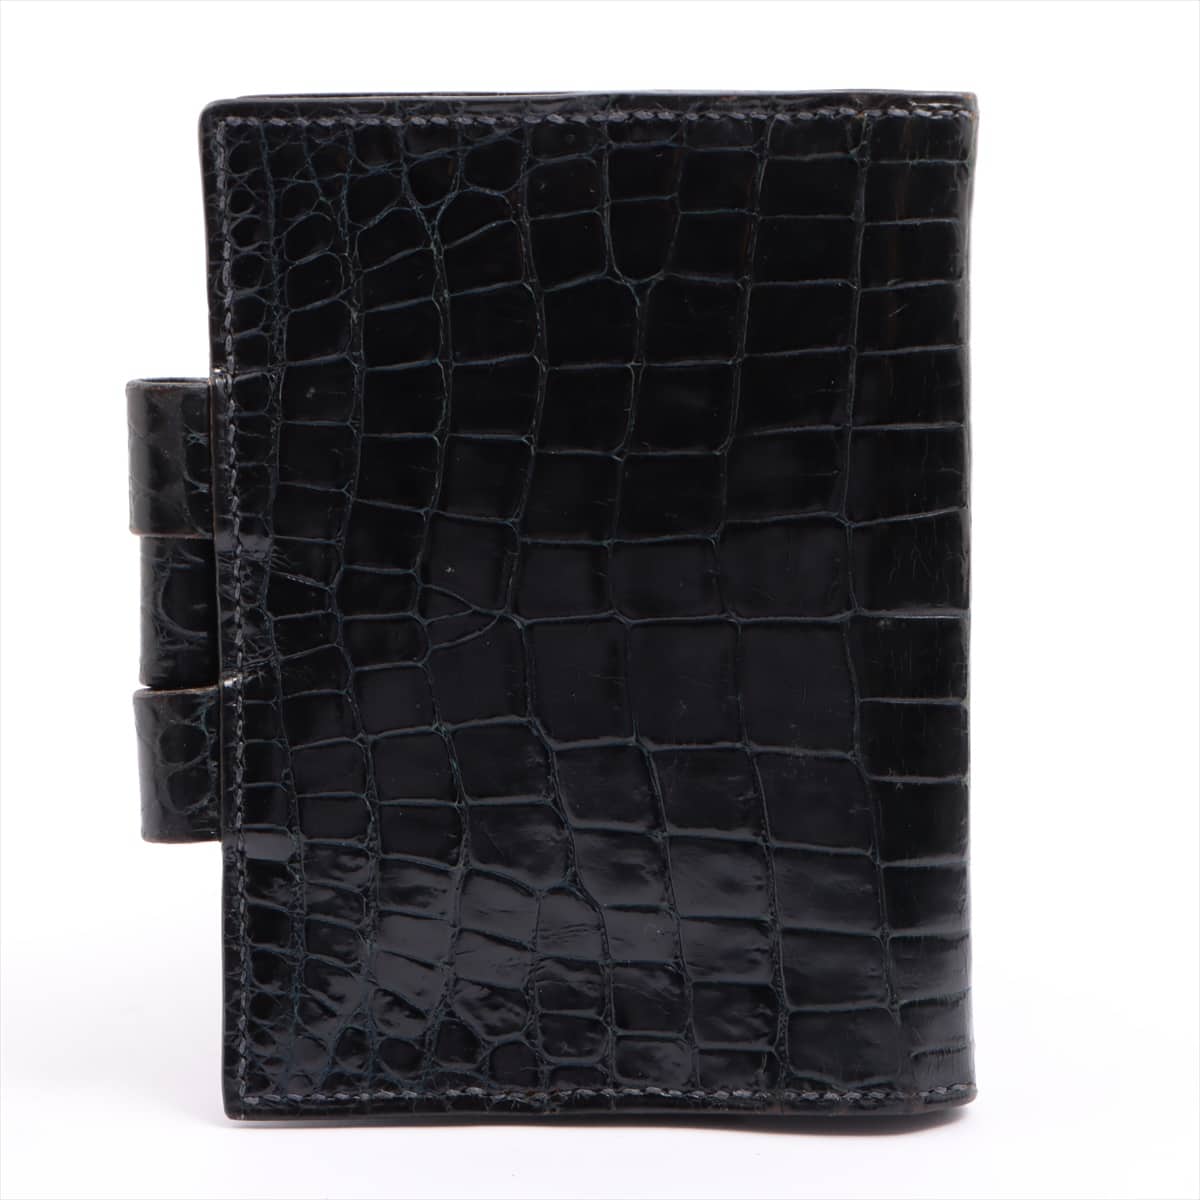 Hermès Agenda PM Crocodile Notebook cover Black Silver Metal fittings ○I:1979